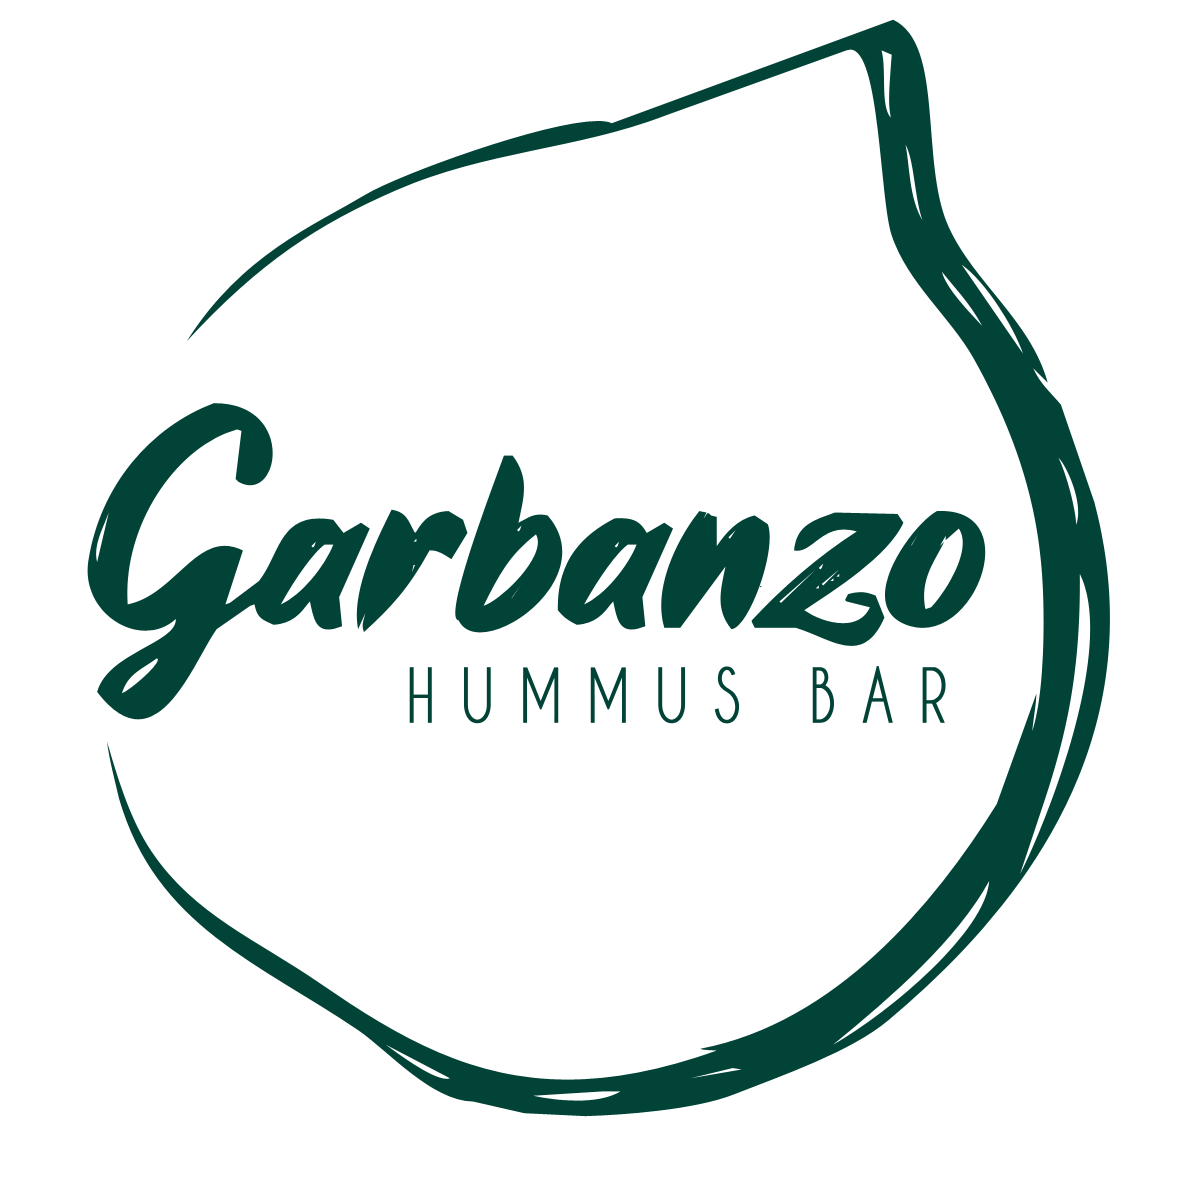 Garbanzo Hummus Bar